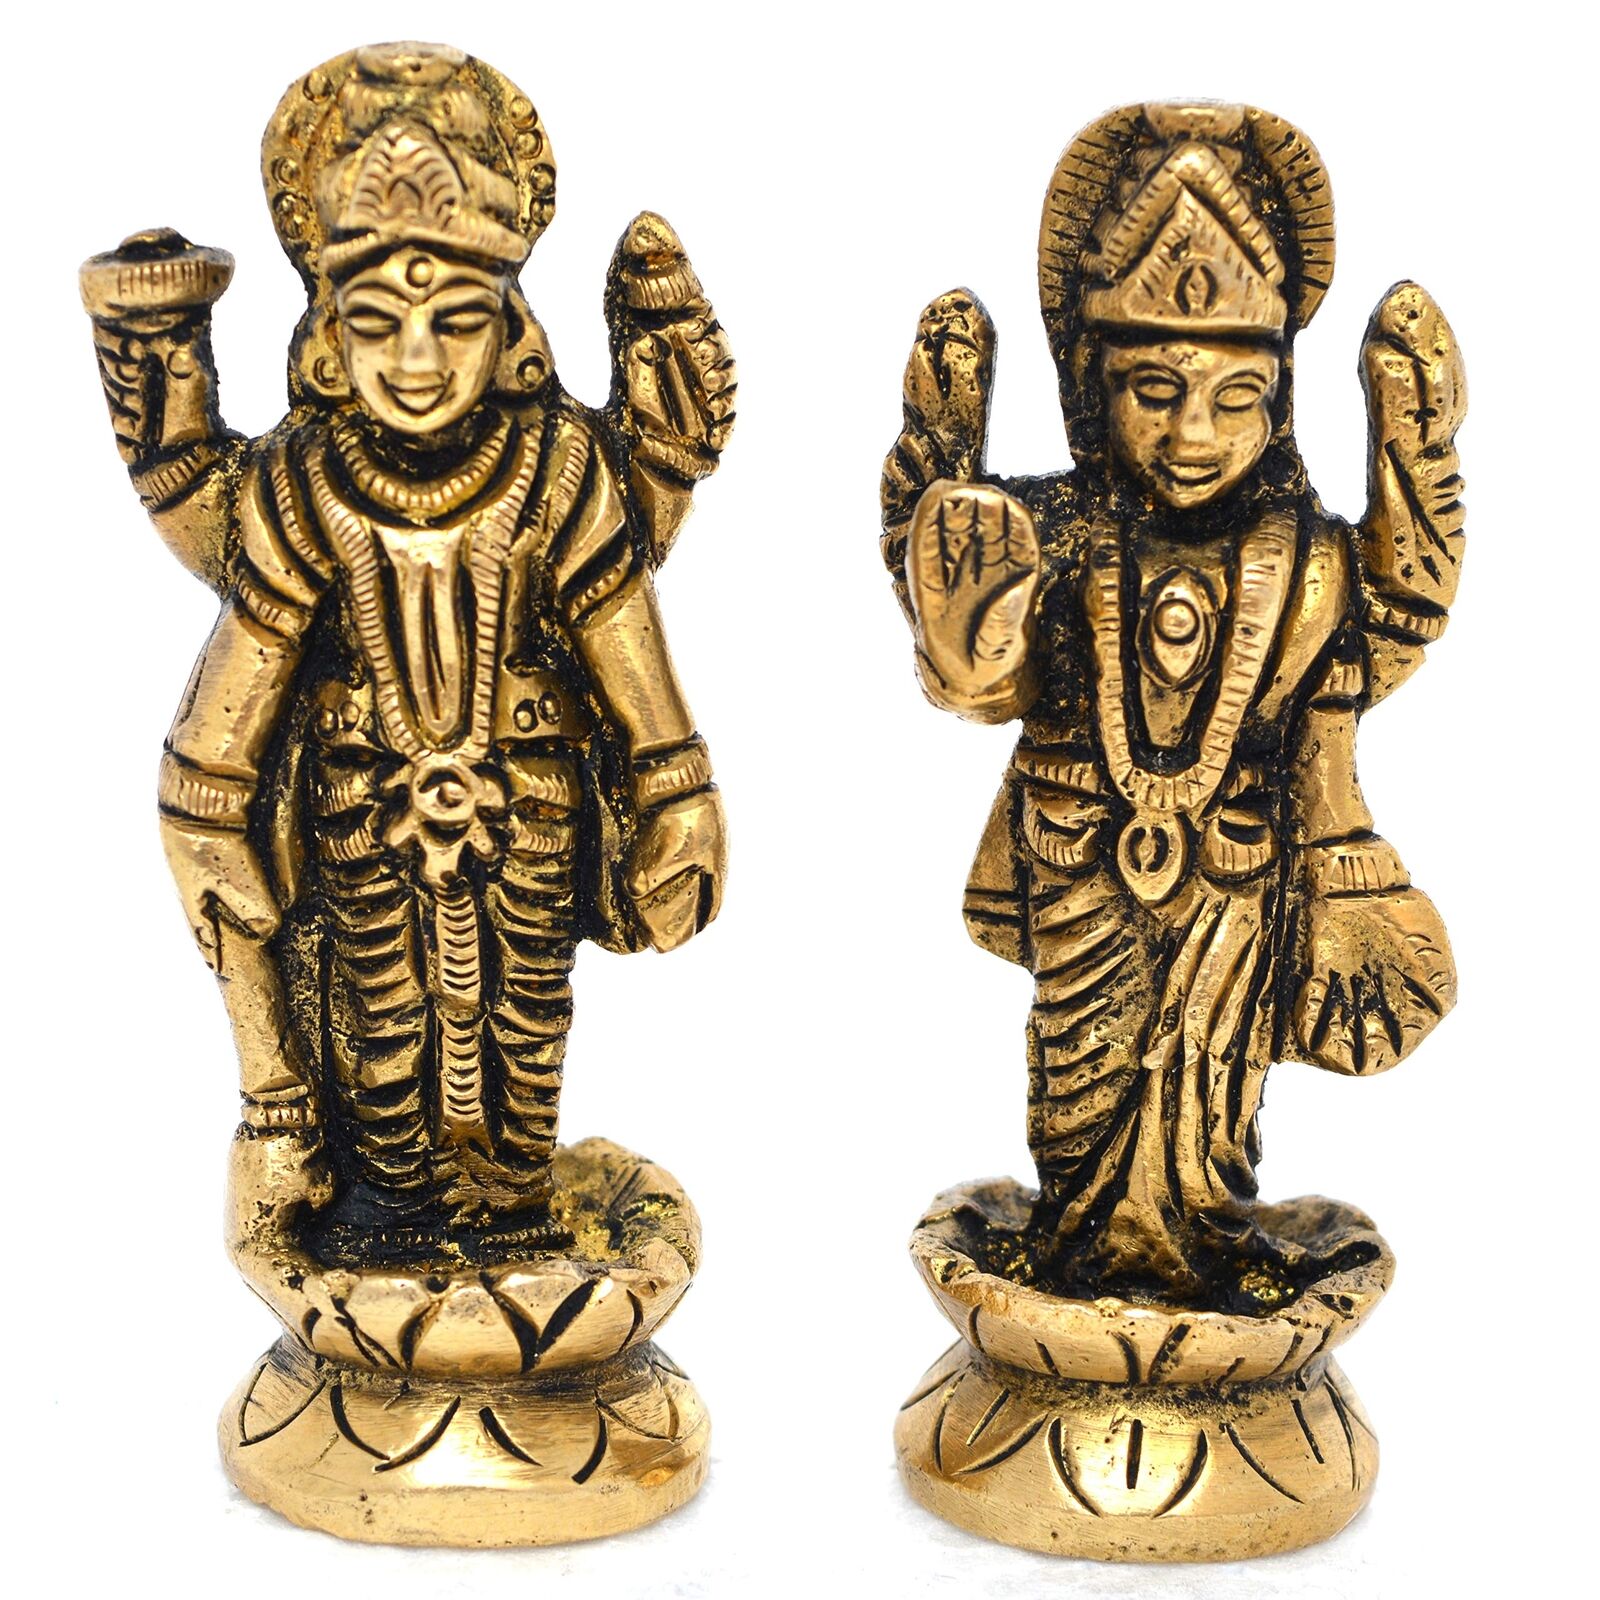 Vishnu Laxmi Brass Idol Statue for Home Decoration Showpiece and Temple Worship